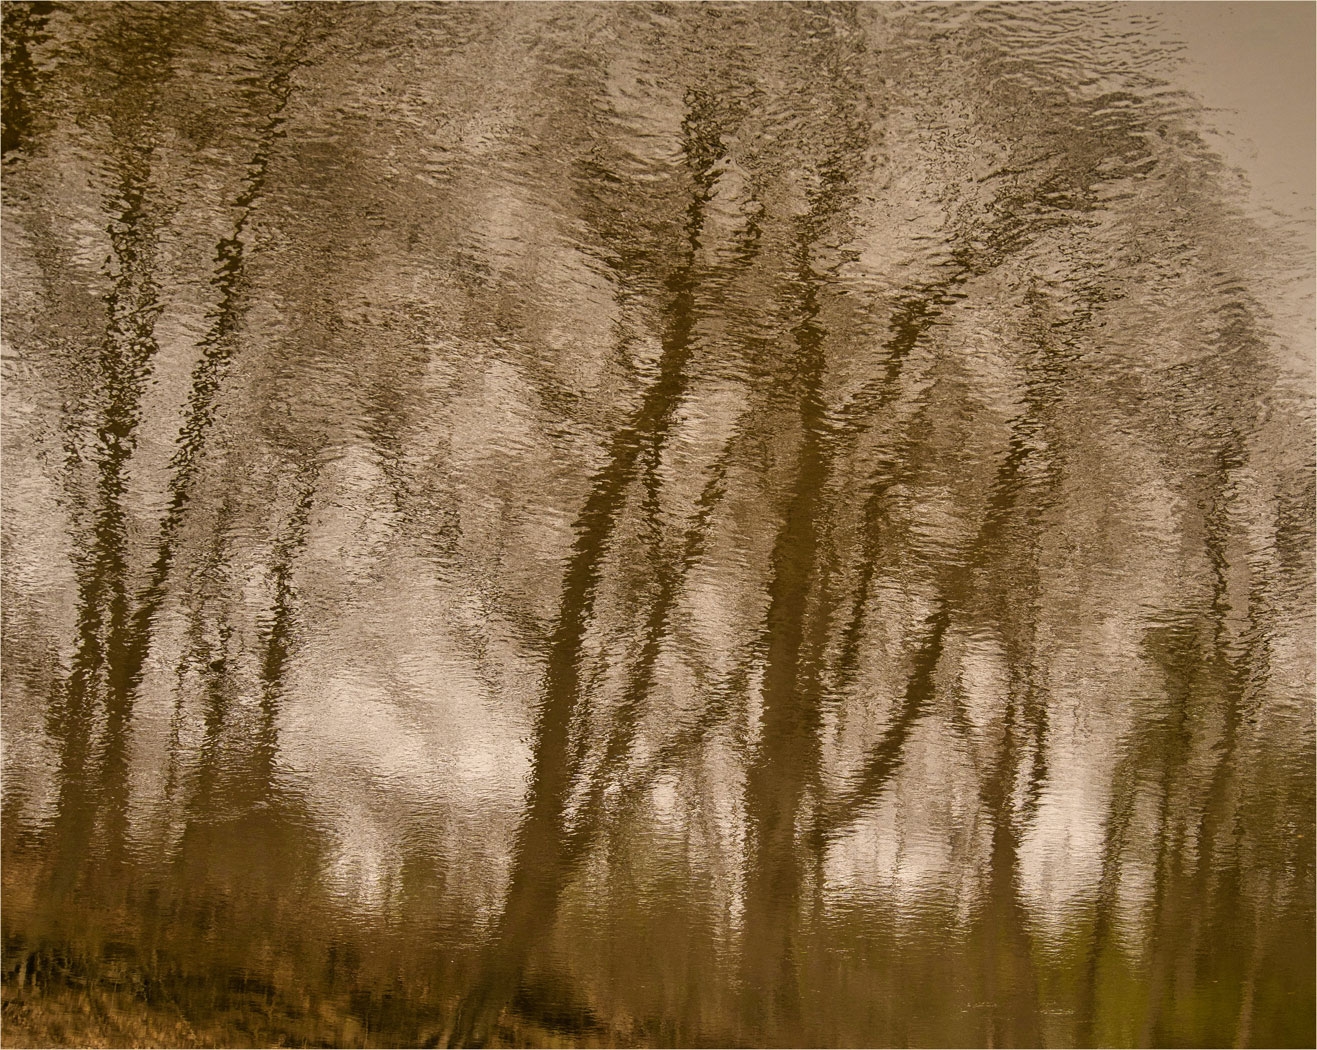 Winter Trees Reflection by Alene Galin